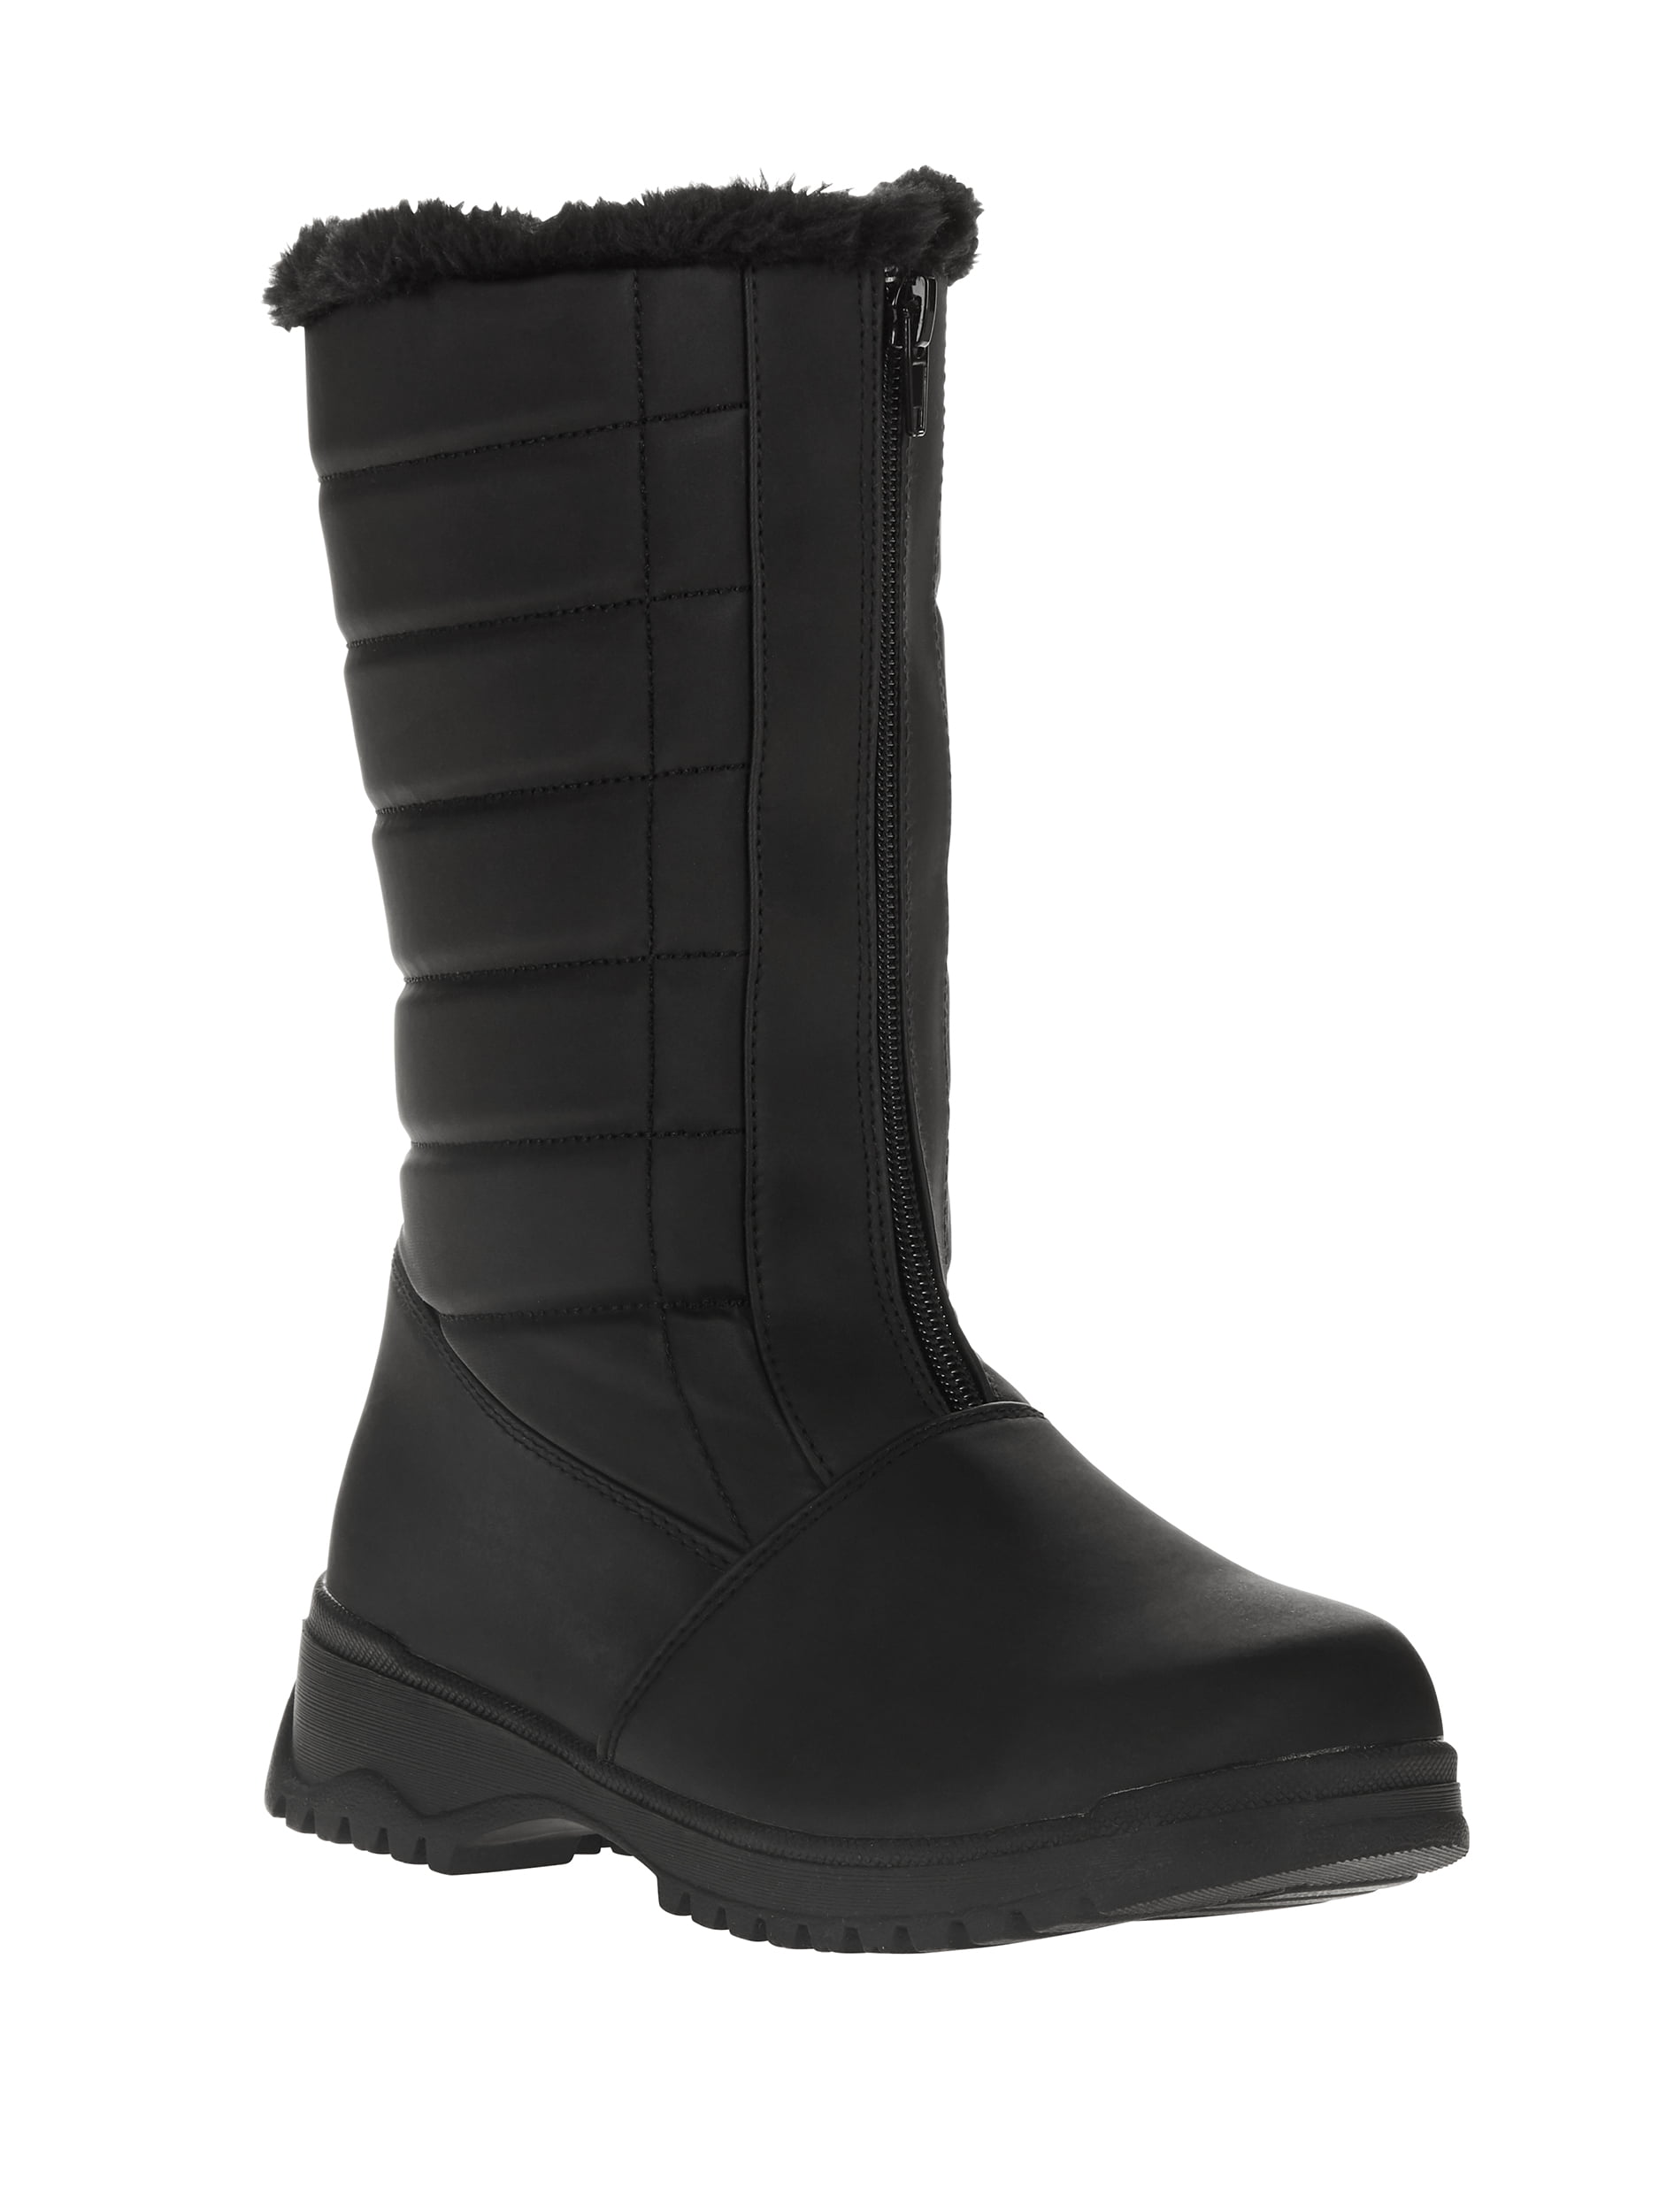 Tundra Womens Lacie Black Snow Boots Size 7 